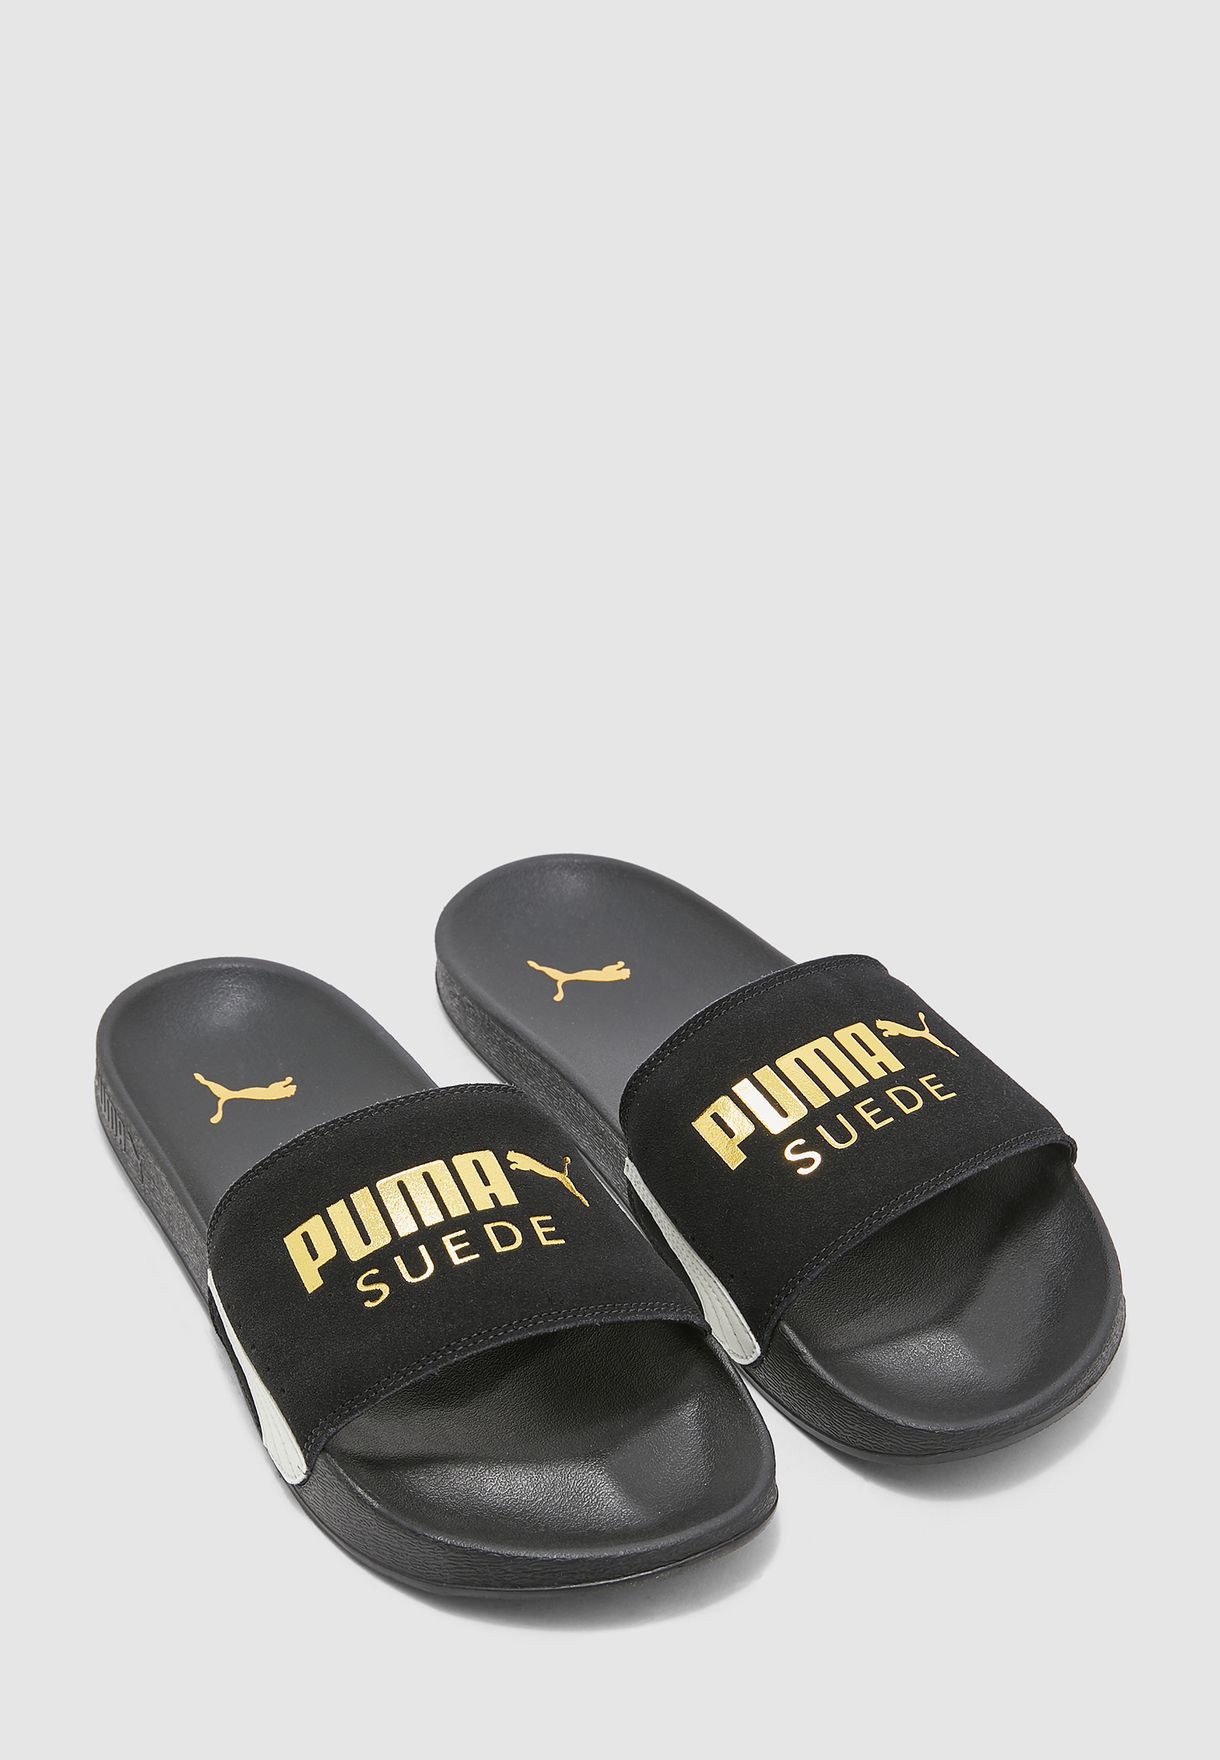 puma black label flip flops